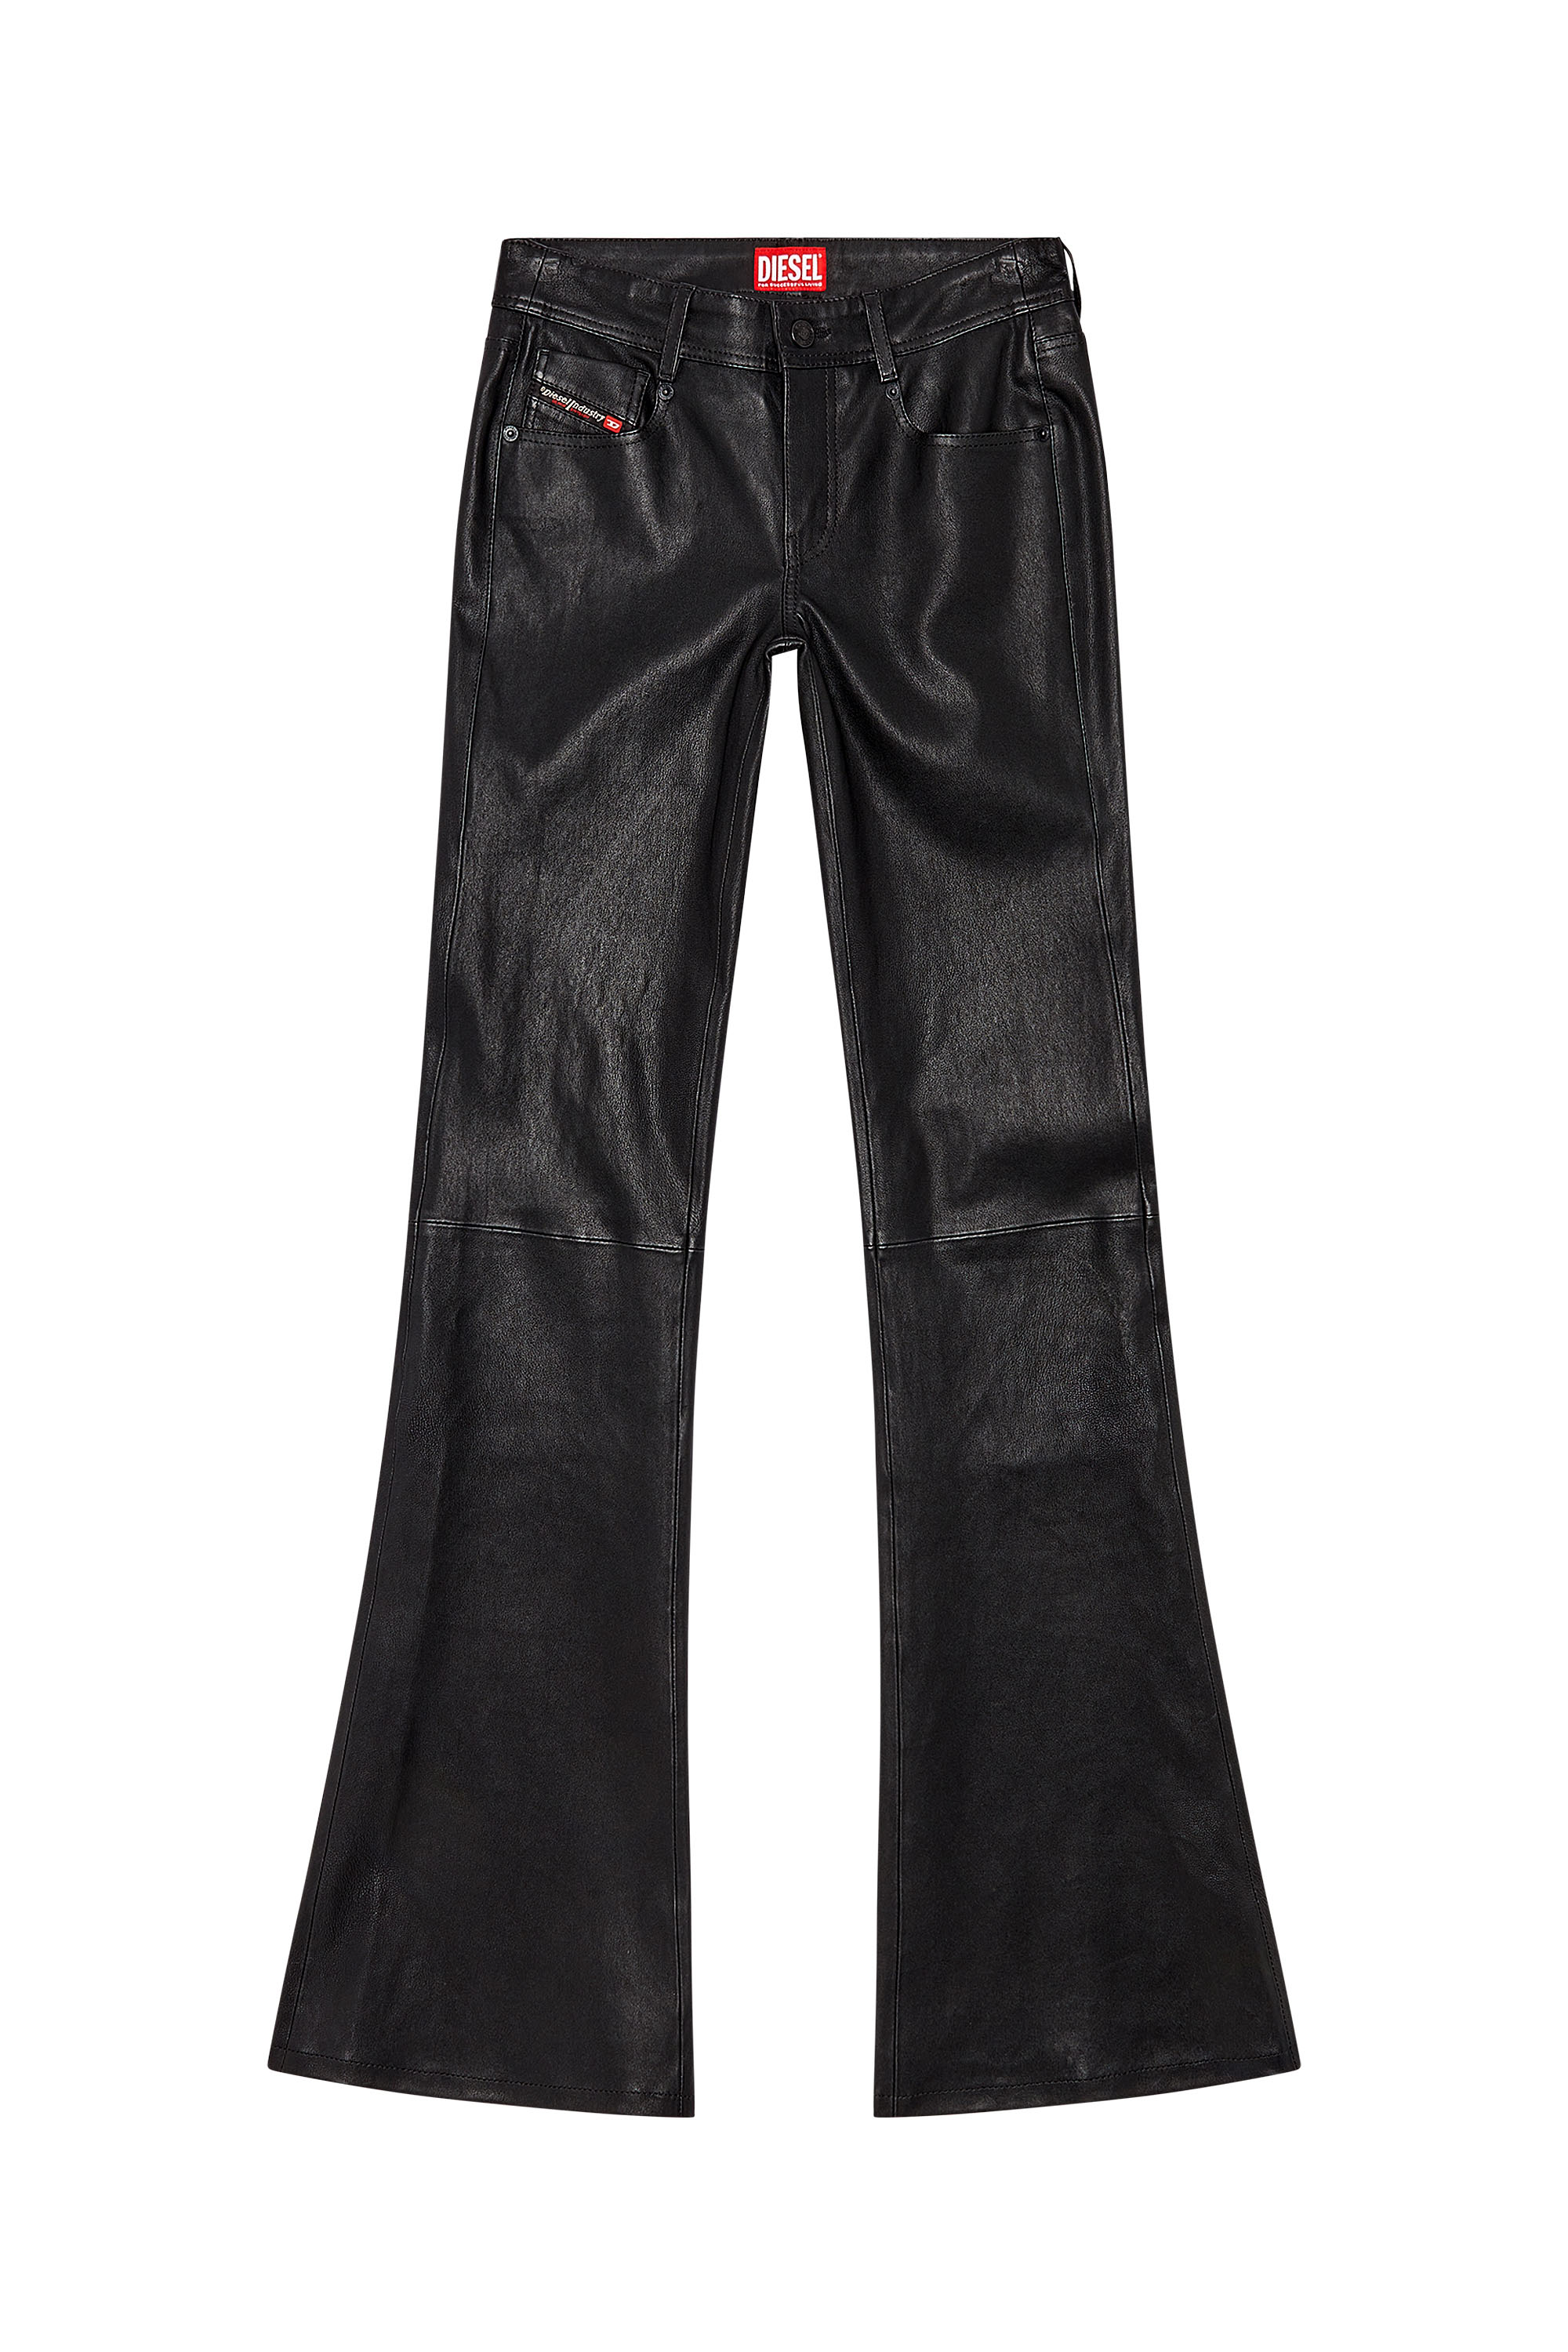 Diesel - L-STELLAR, Woman Bootcut pants in stretch leather in Black - Image 5